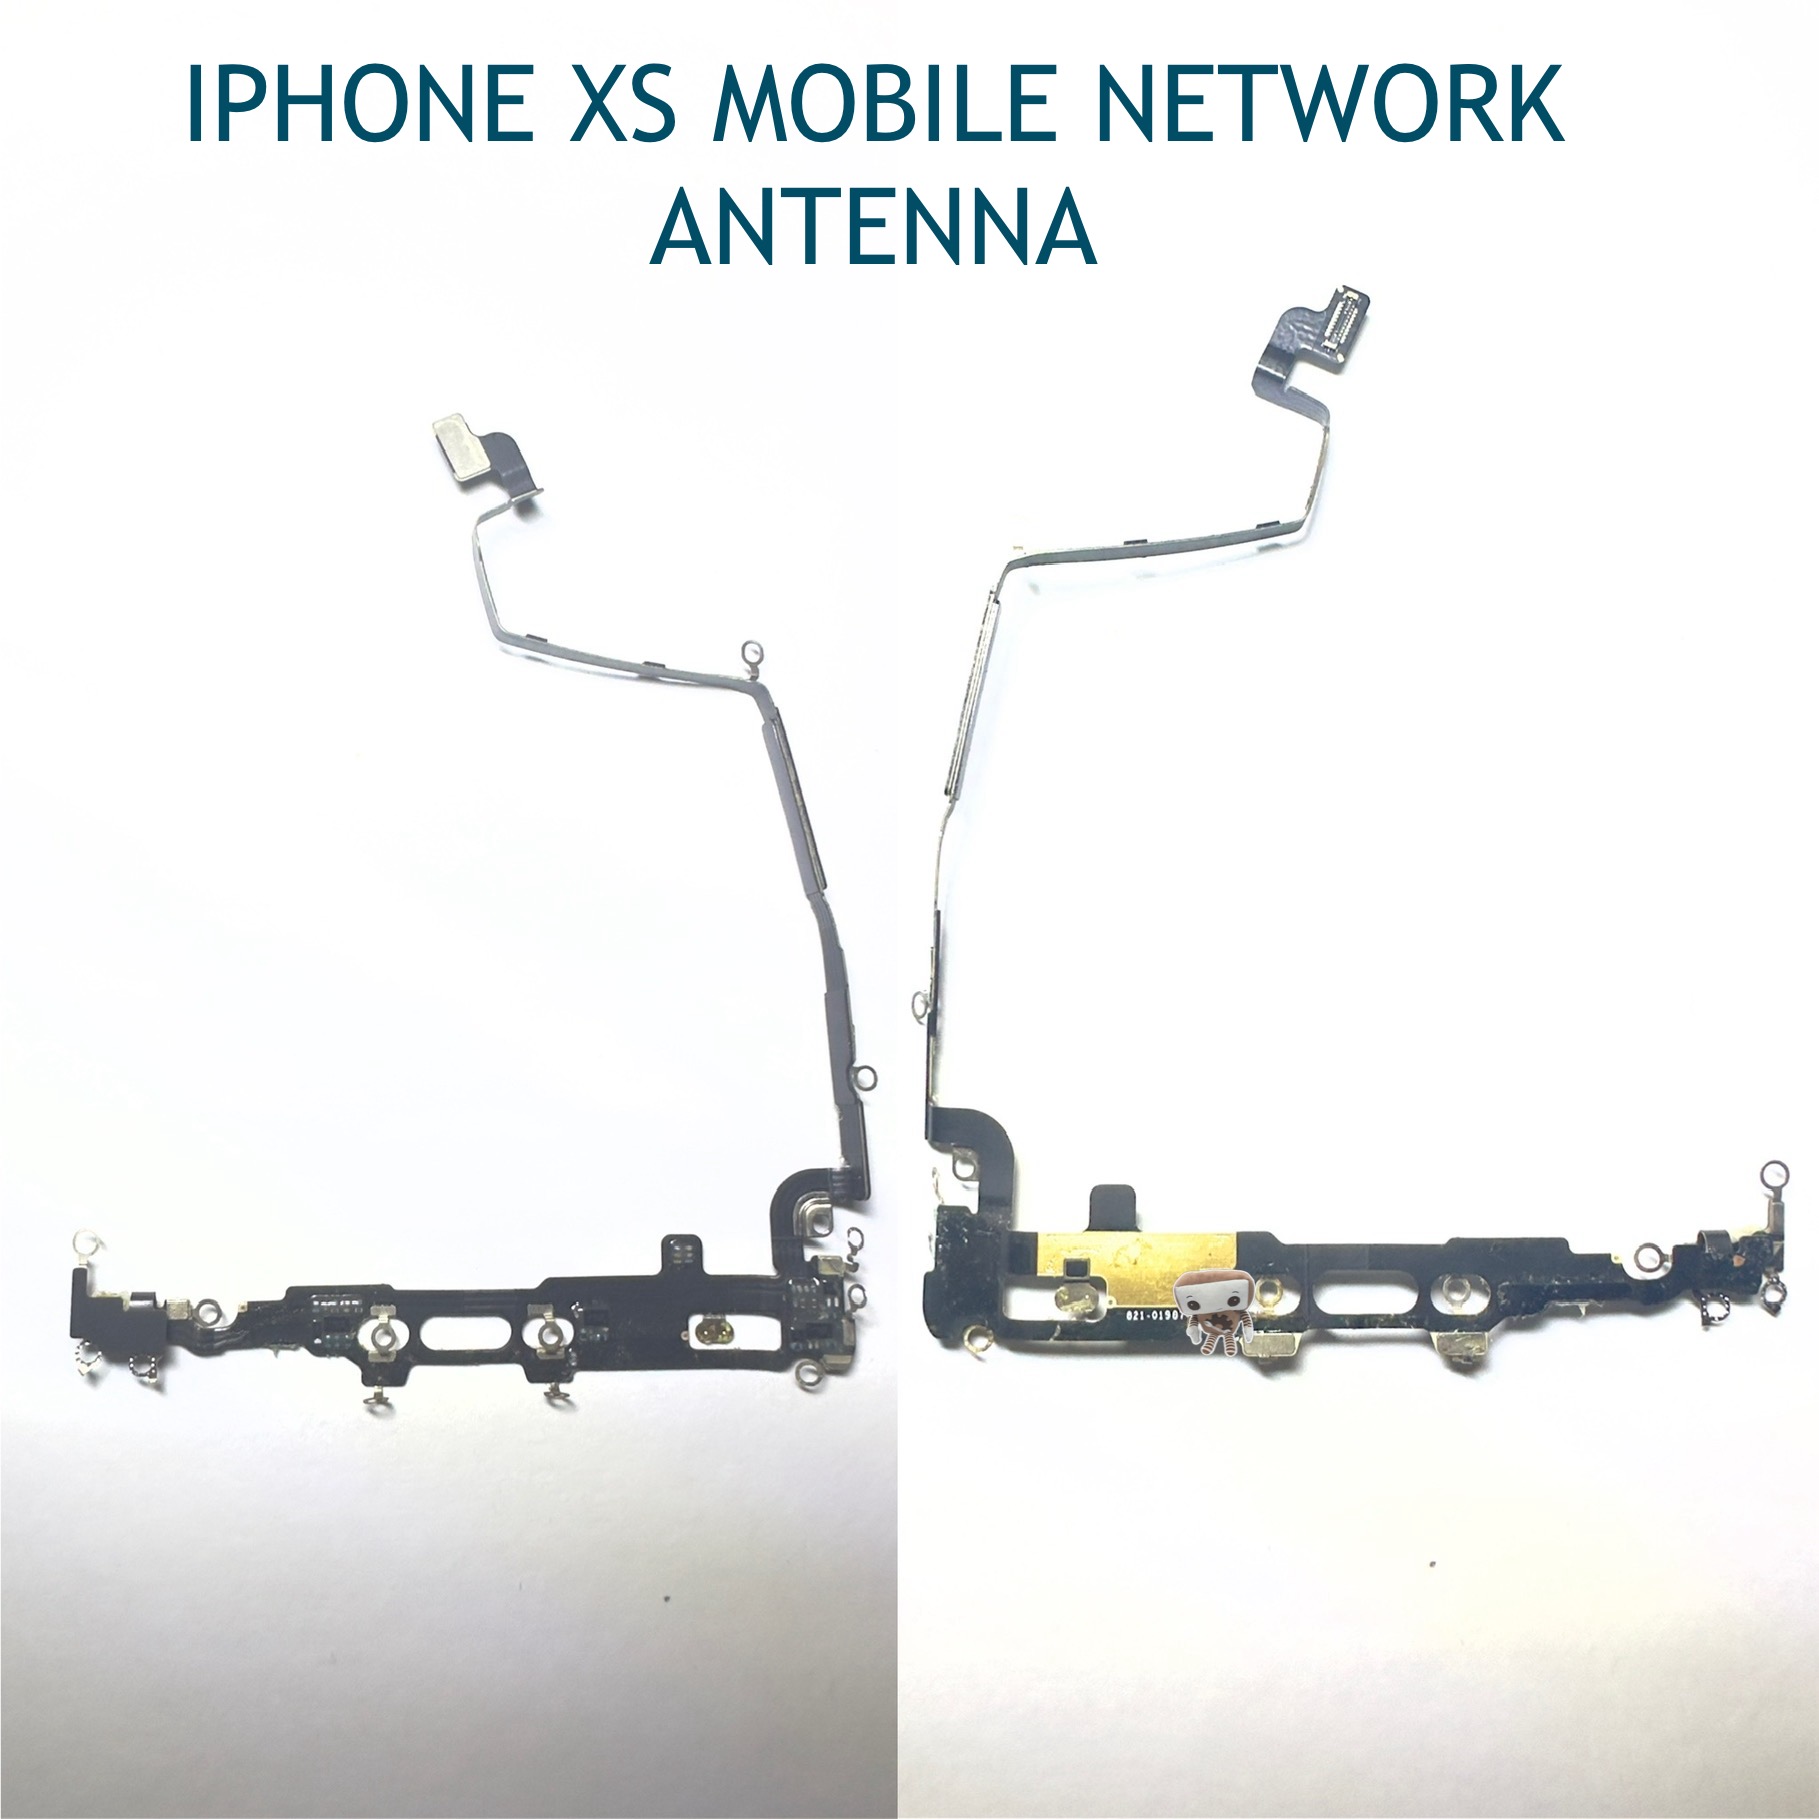 IPHONE XS NETWORK ANTENNA